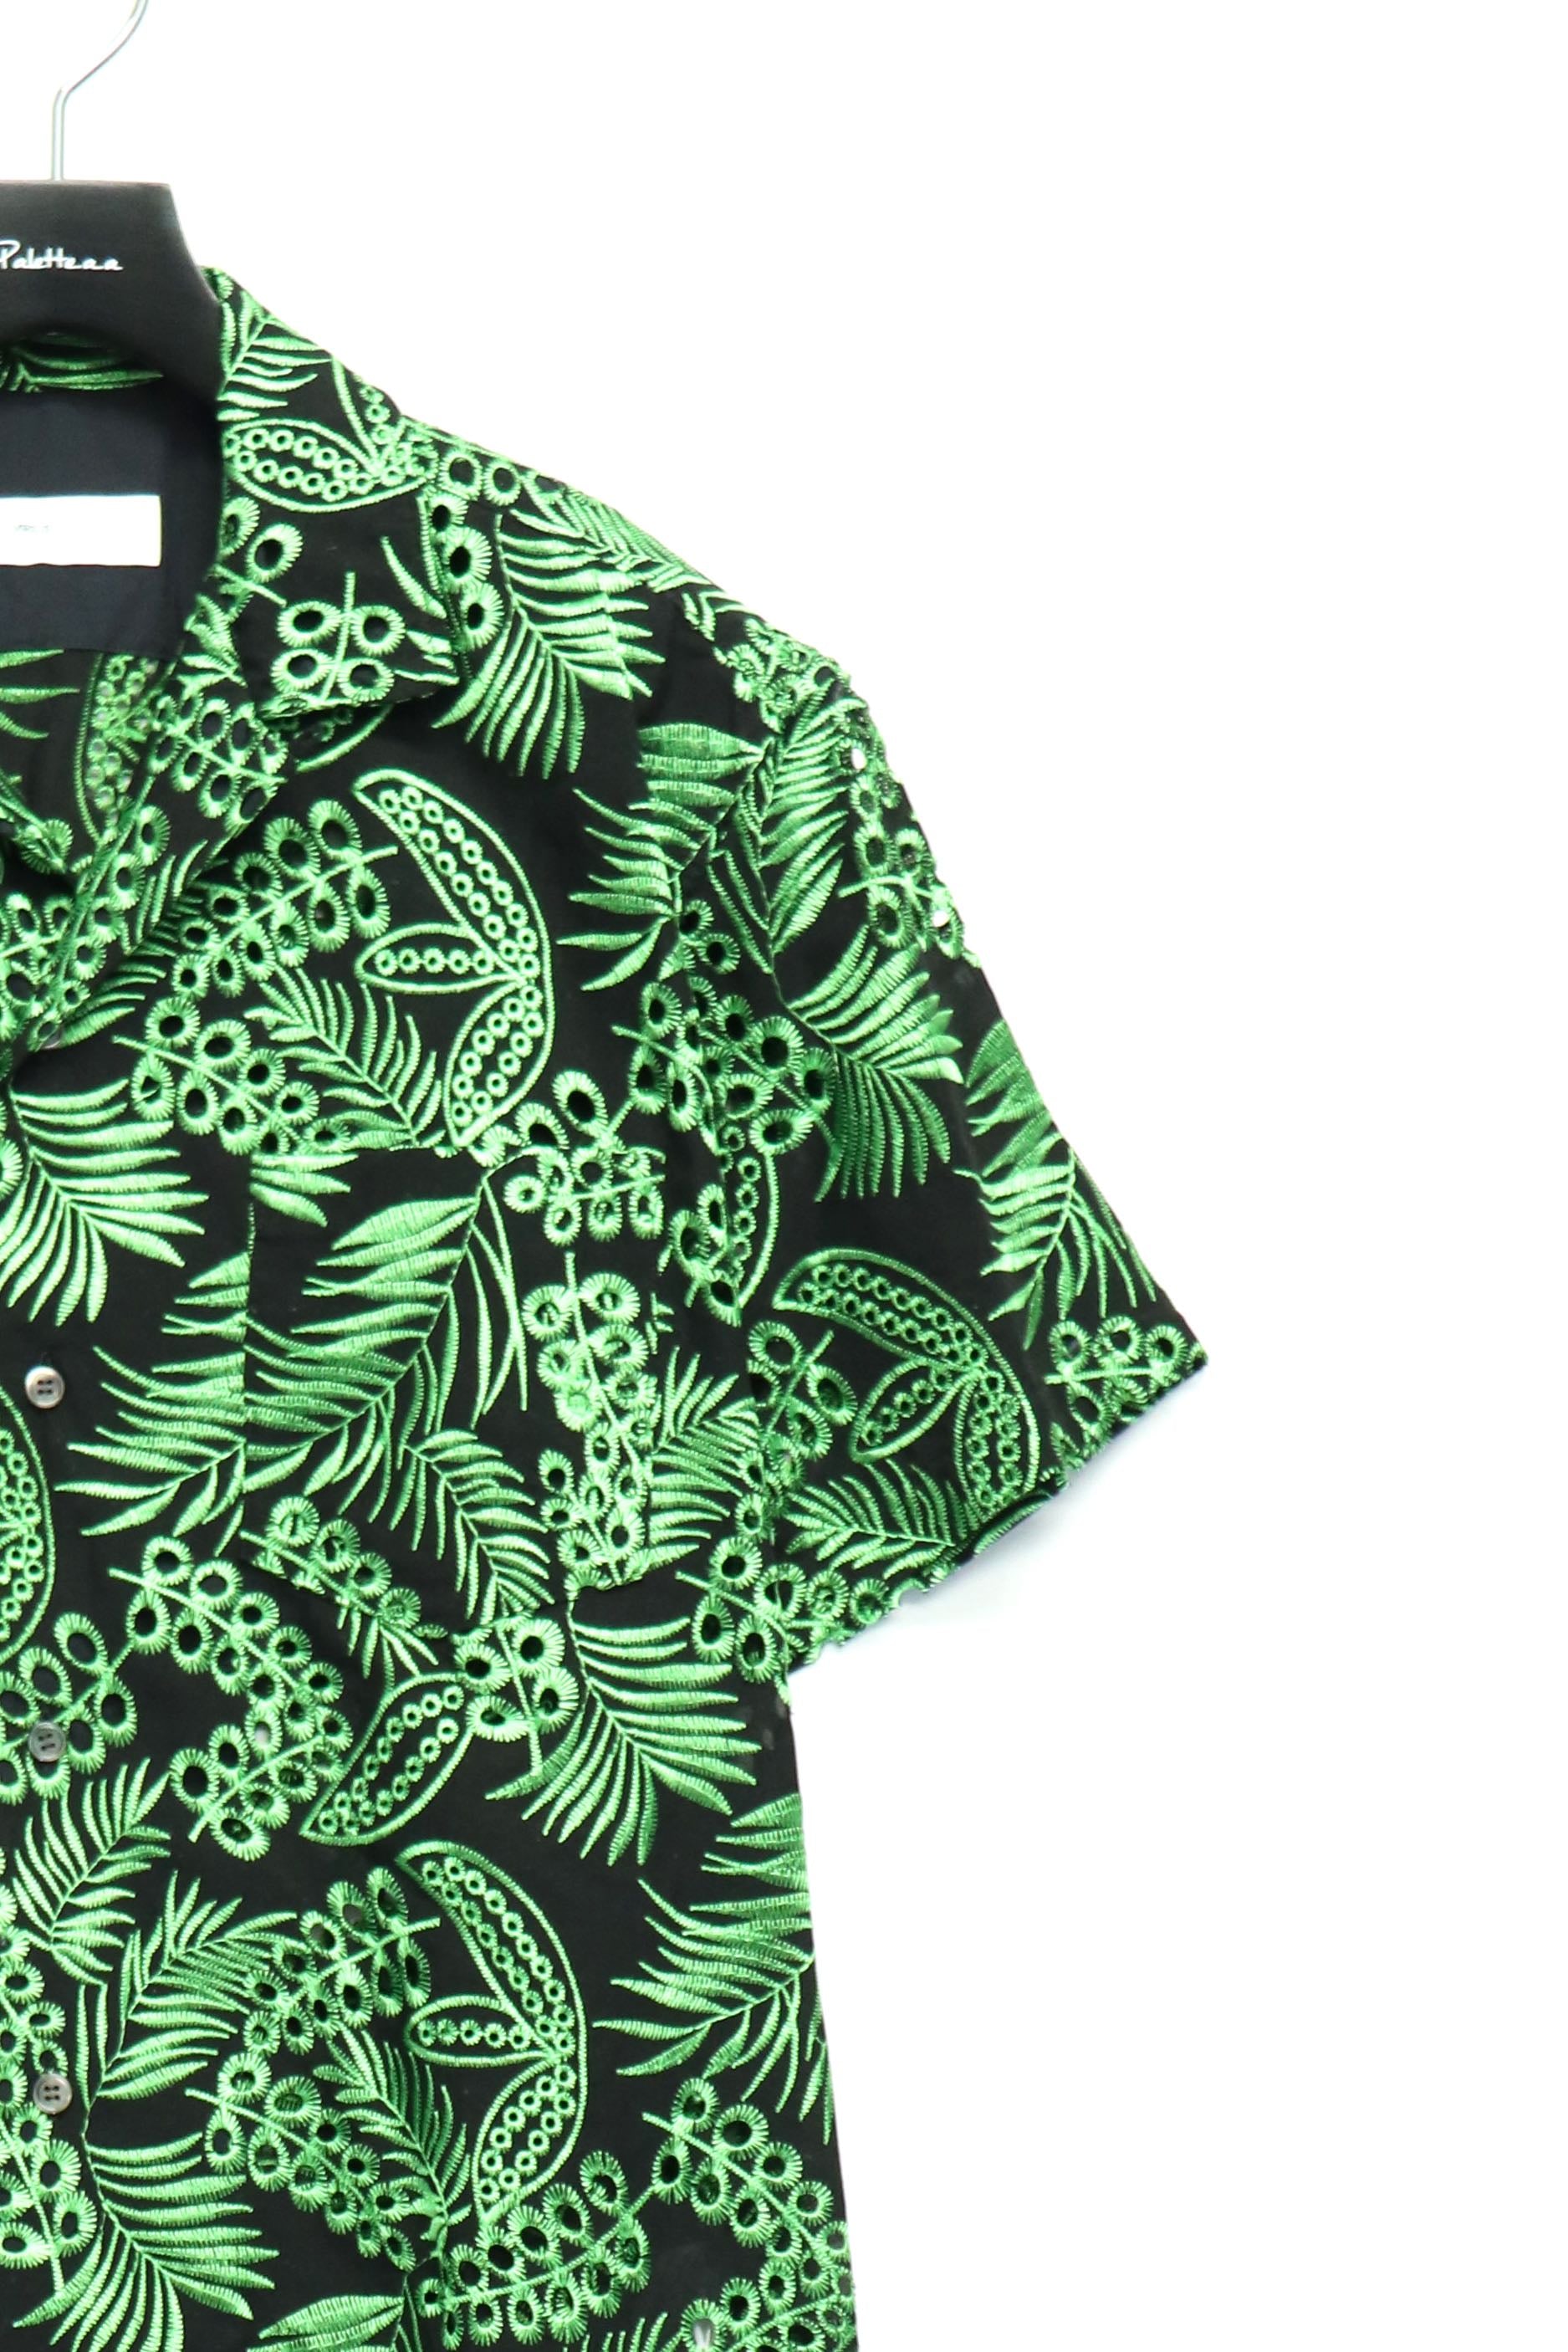 TOGA VIRILIS(トーガ ビリリース)のCotton Embroidery S/S shirt BLACK